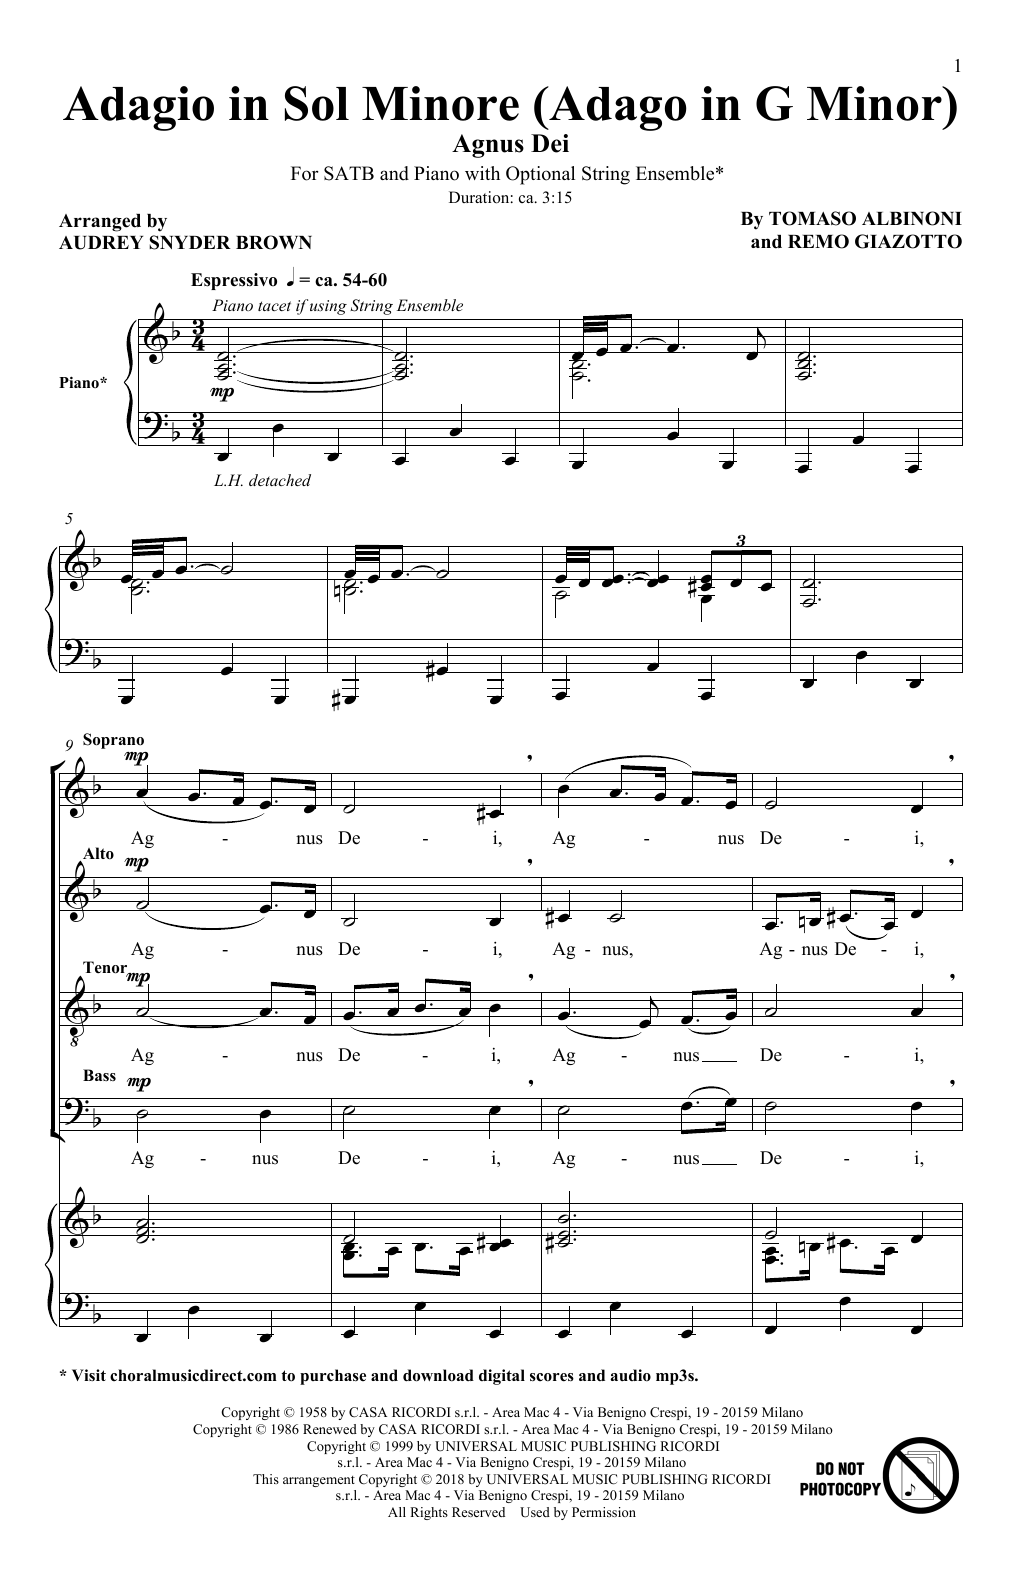 Tomaso Albinoni & Remo Giazotto Adagio In Sol Minore (Adagio In G Minor) (arr. Audrey Snyder) Sheet Music Notes & Chords for SATB Choir - Download or Print PDF